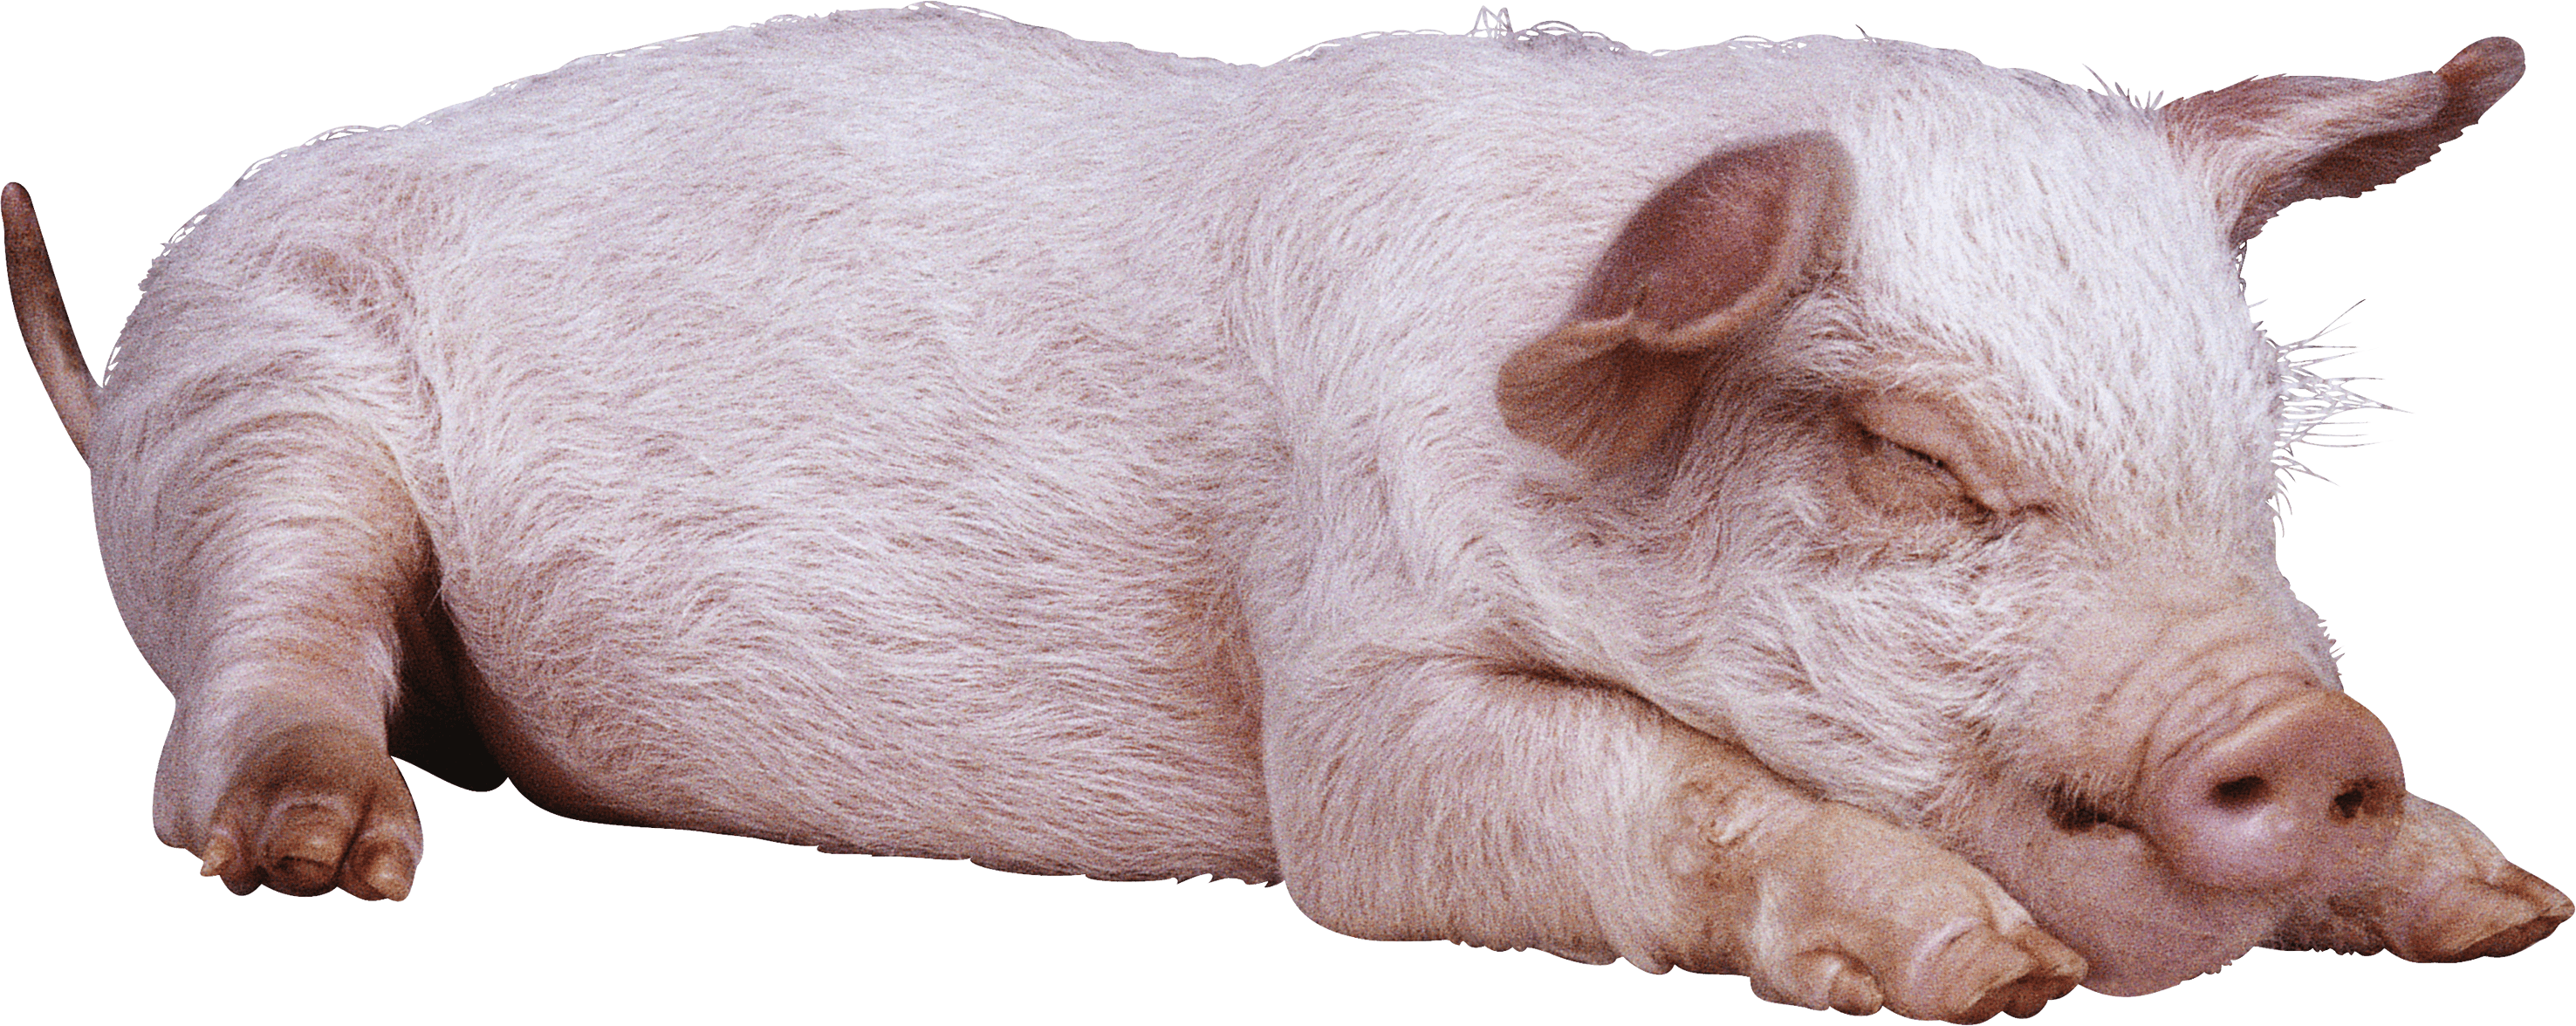 Sleeping Pig Png Image PNG Image